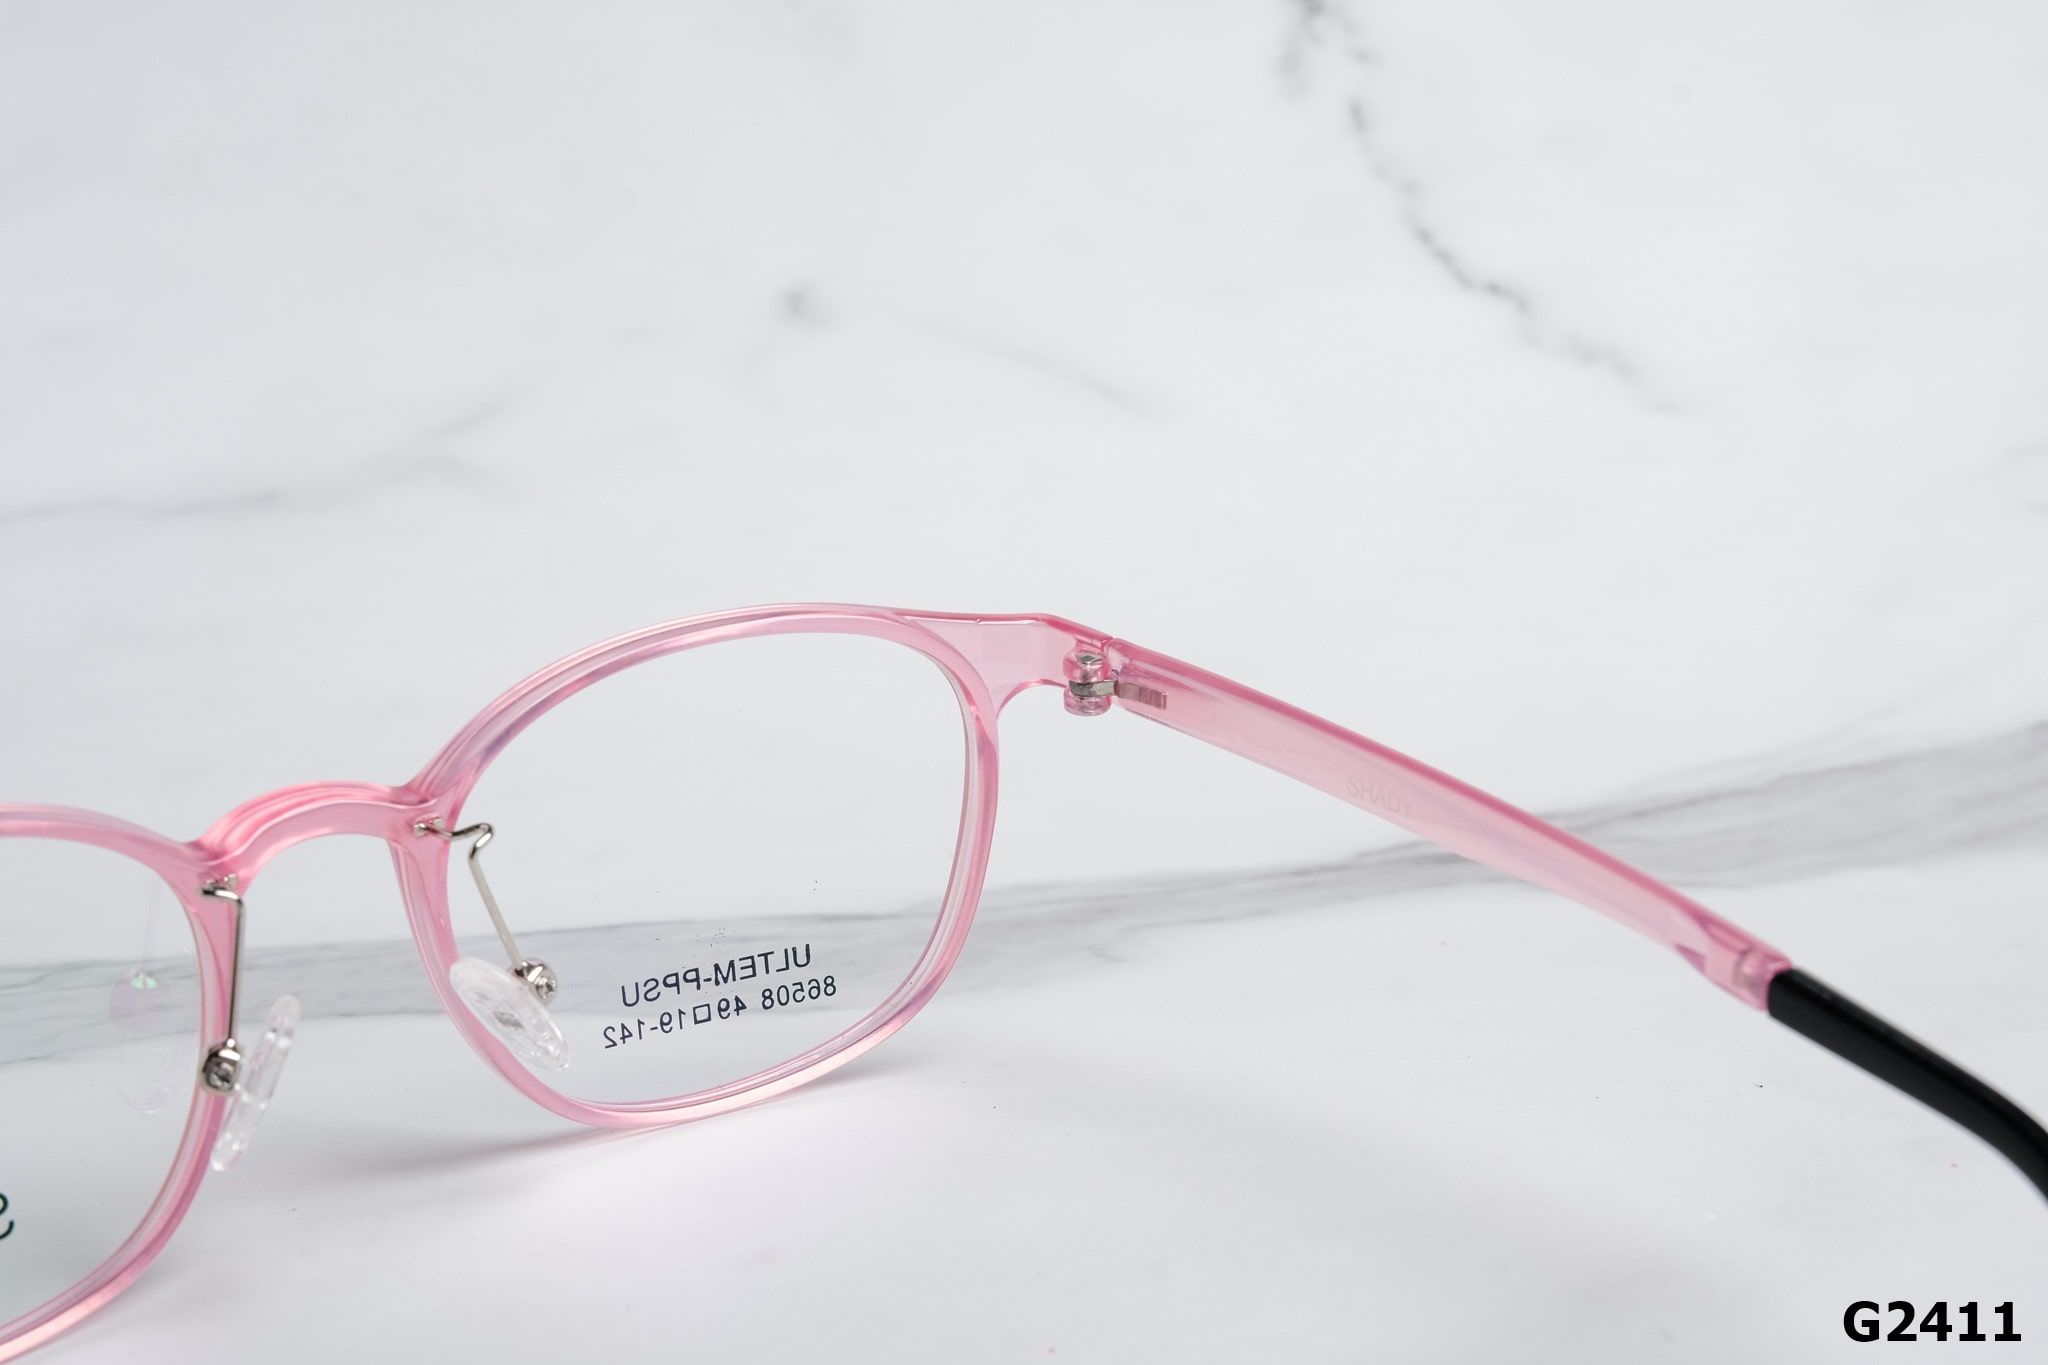  SHADY Eyewear - Glasses - G2411 